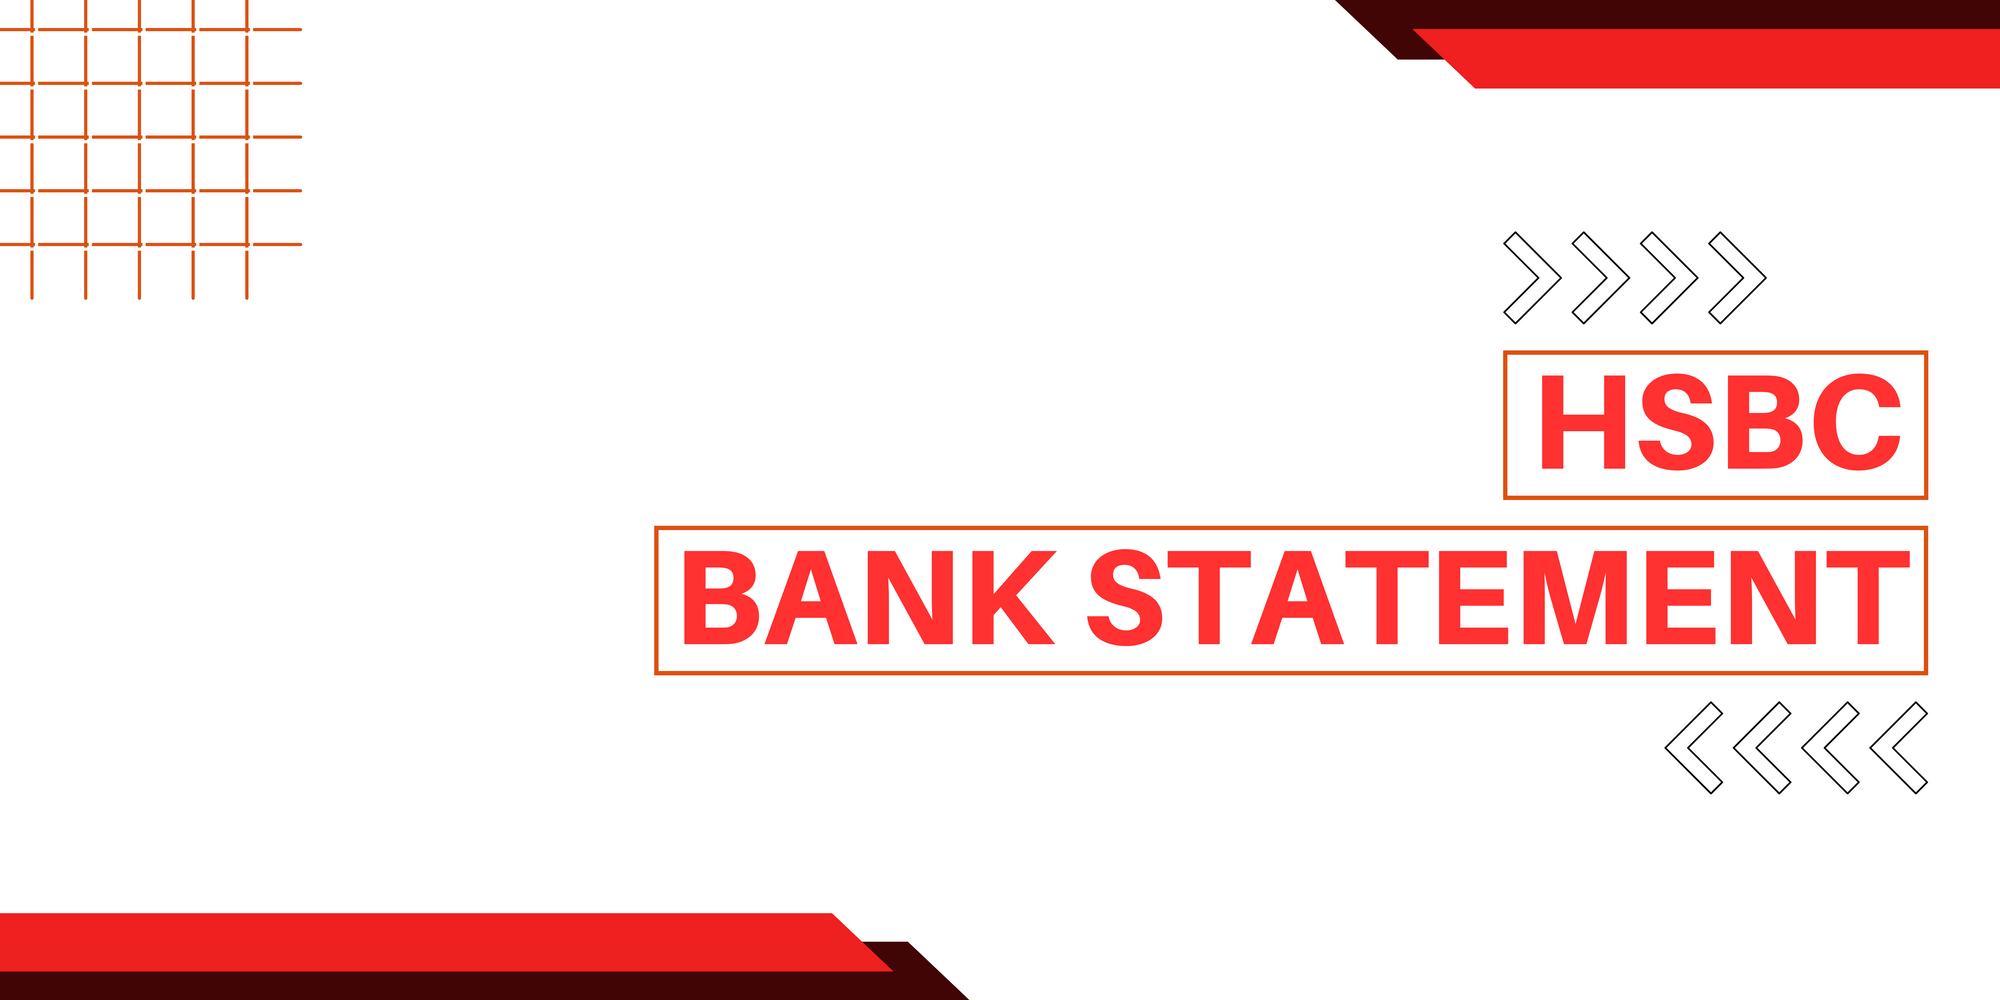 HSBC Bank Statement Review